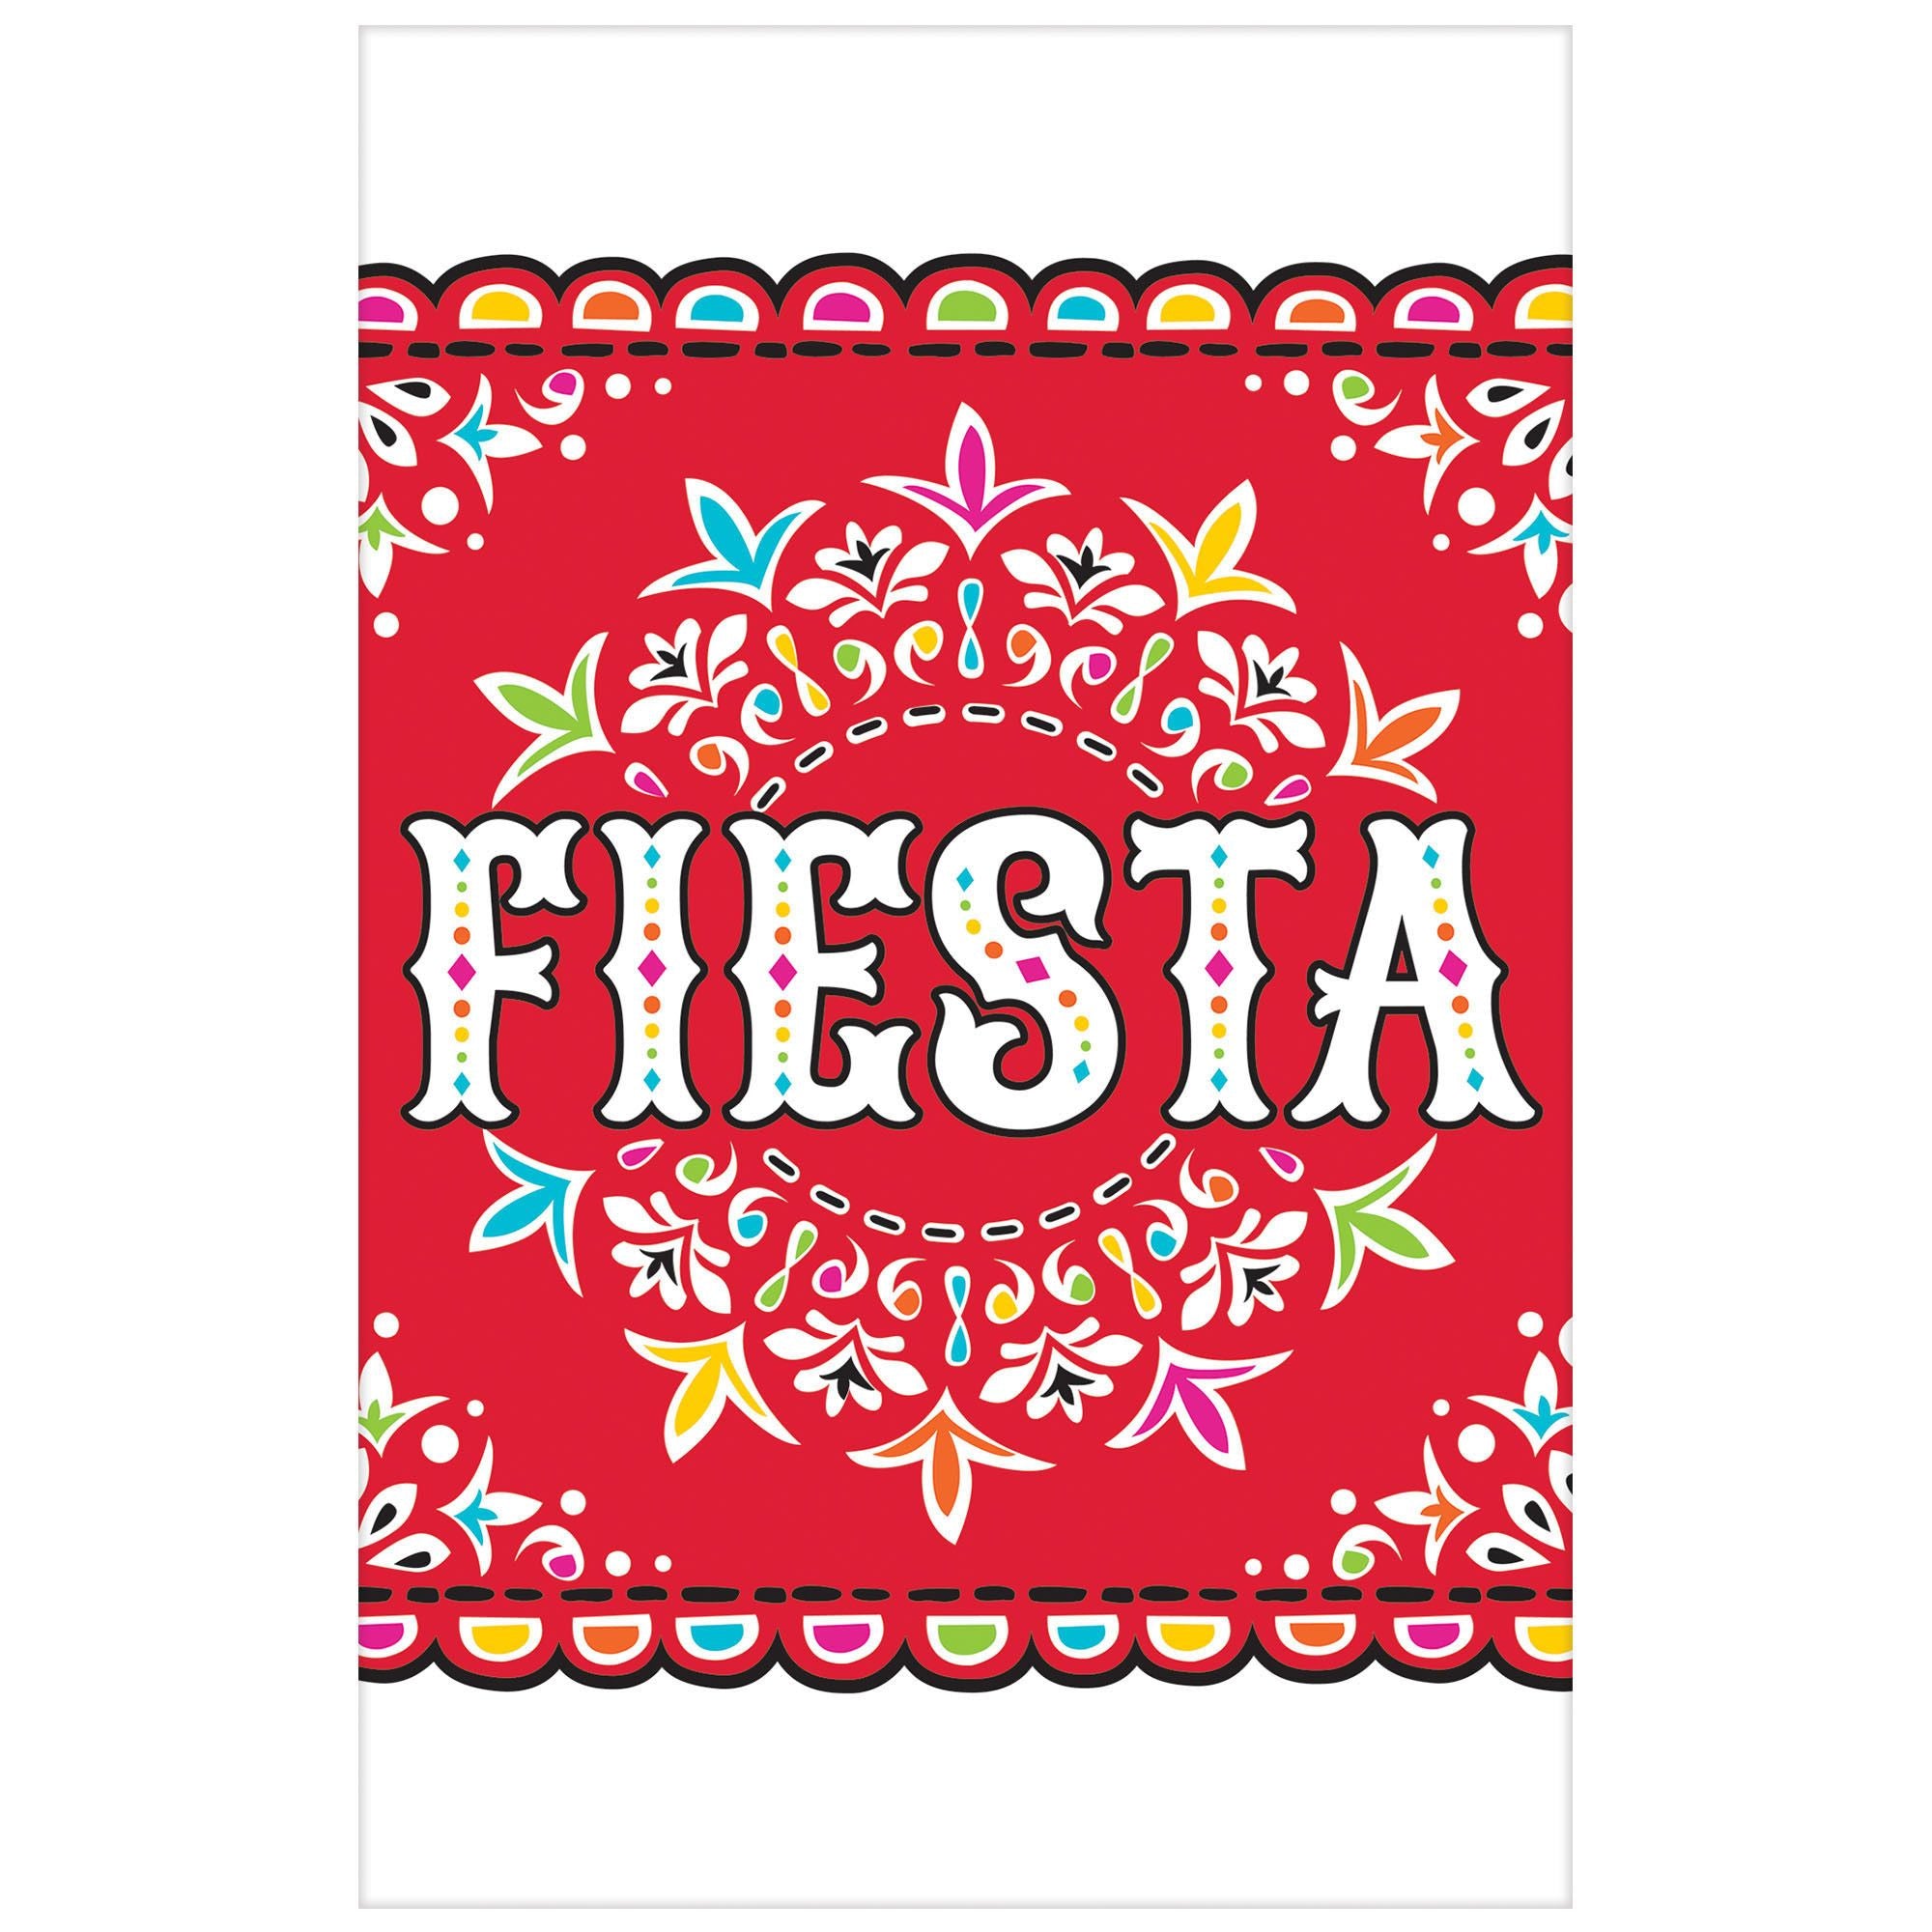 Fiesta Plastic Table Cover